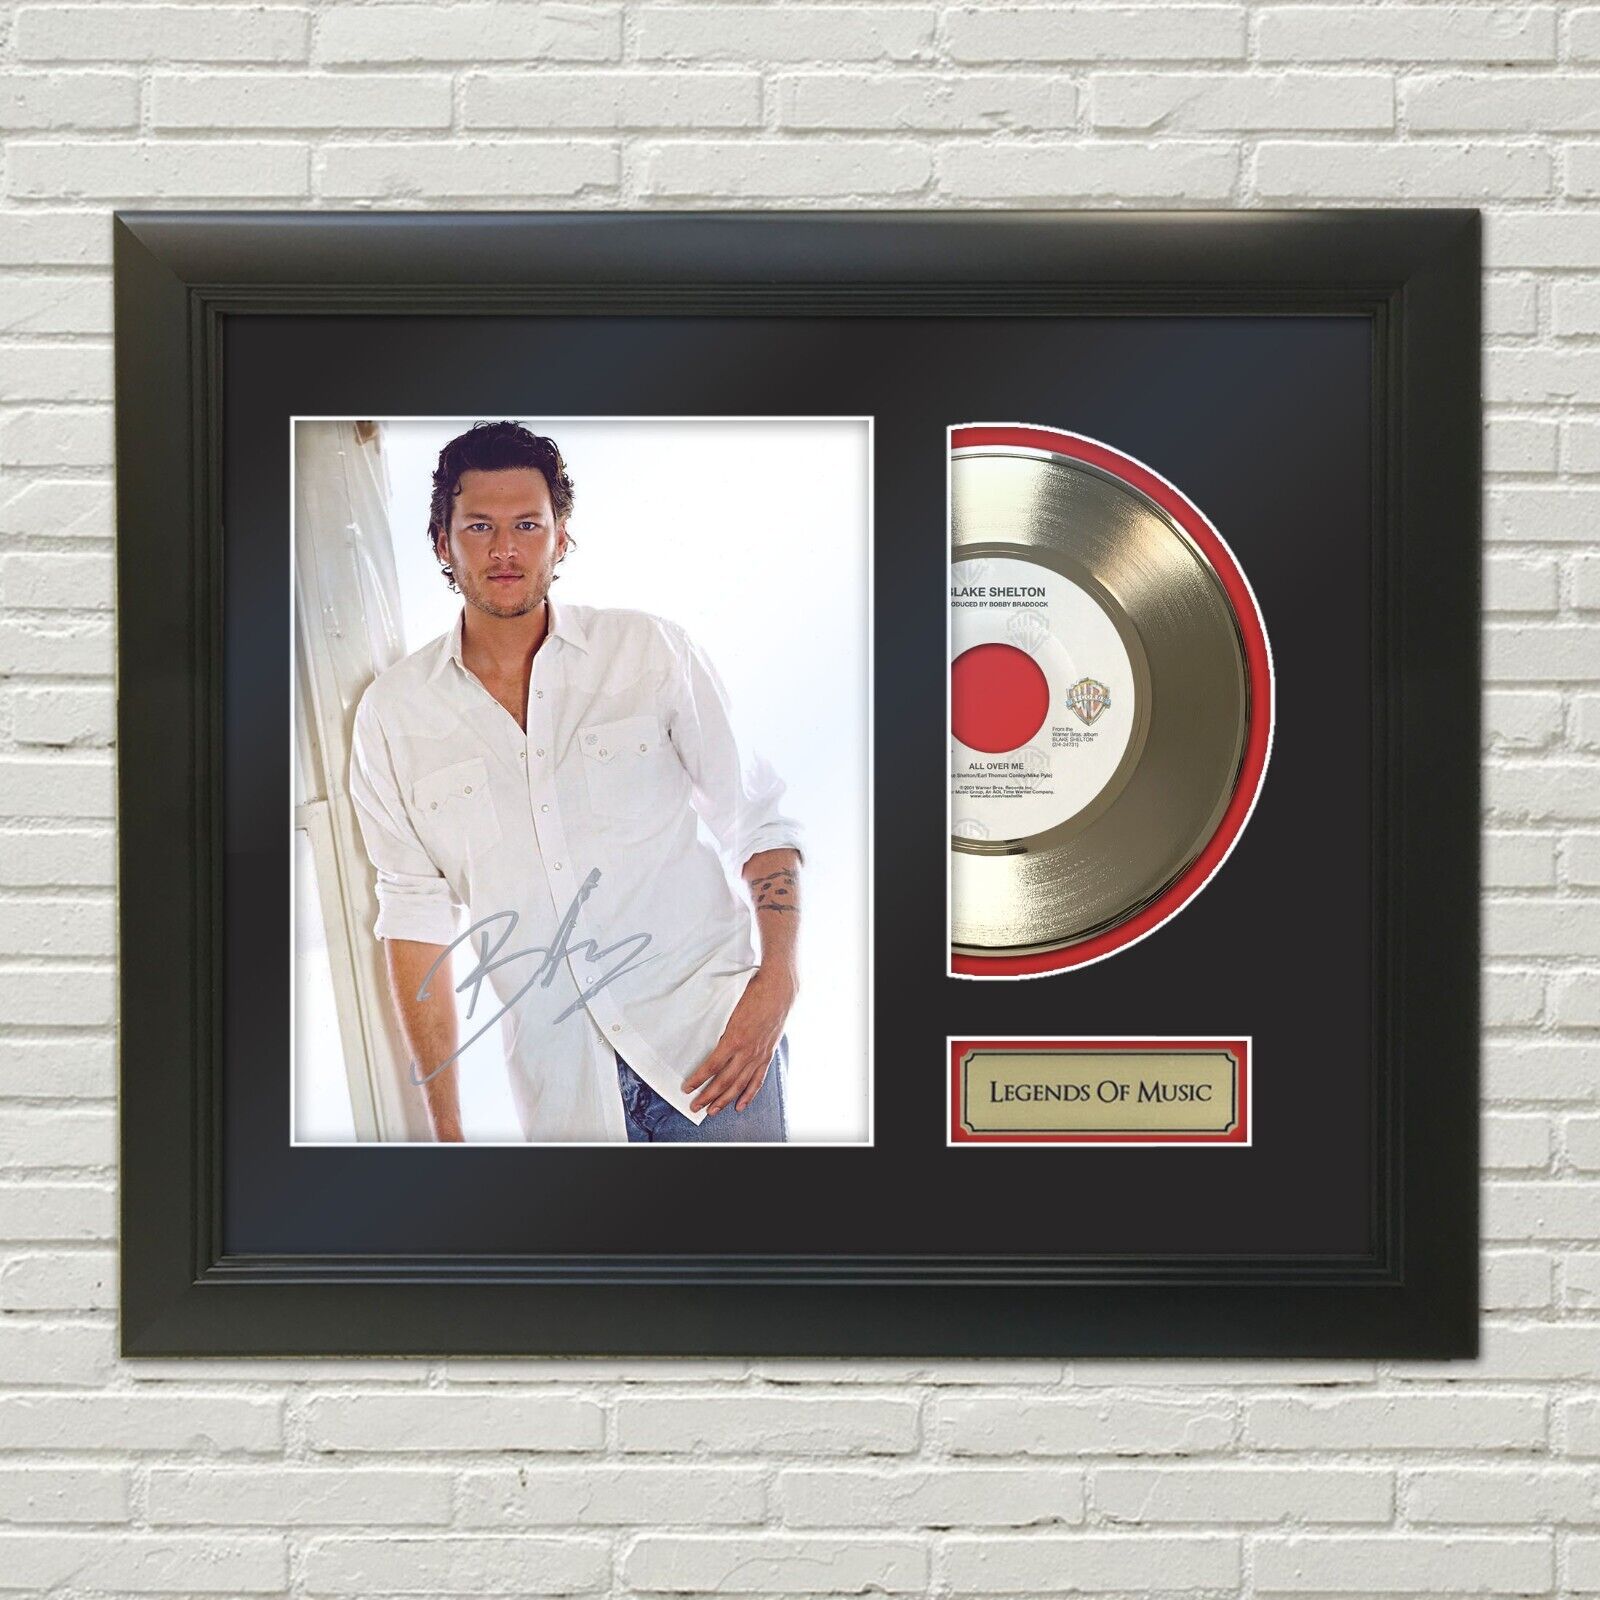 Blake Sheldon Gold Framed 45 Record Display w/Reproduction Signature